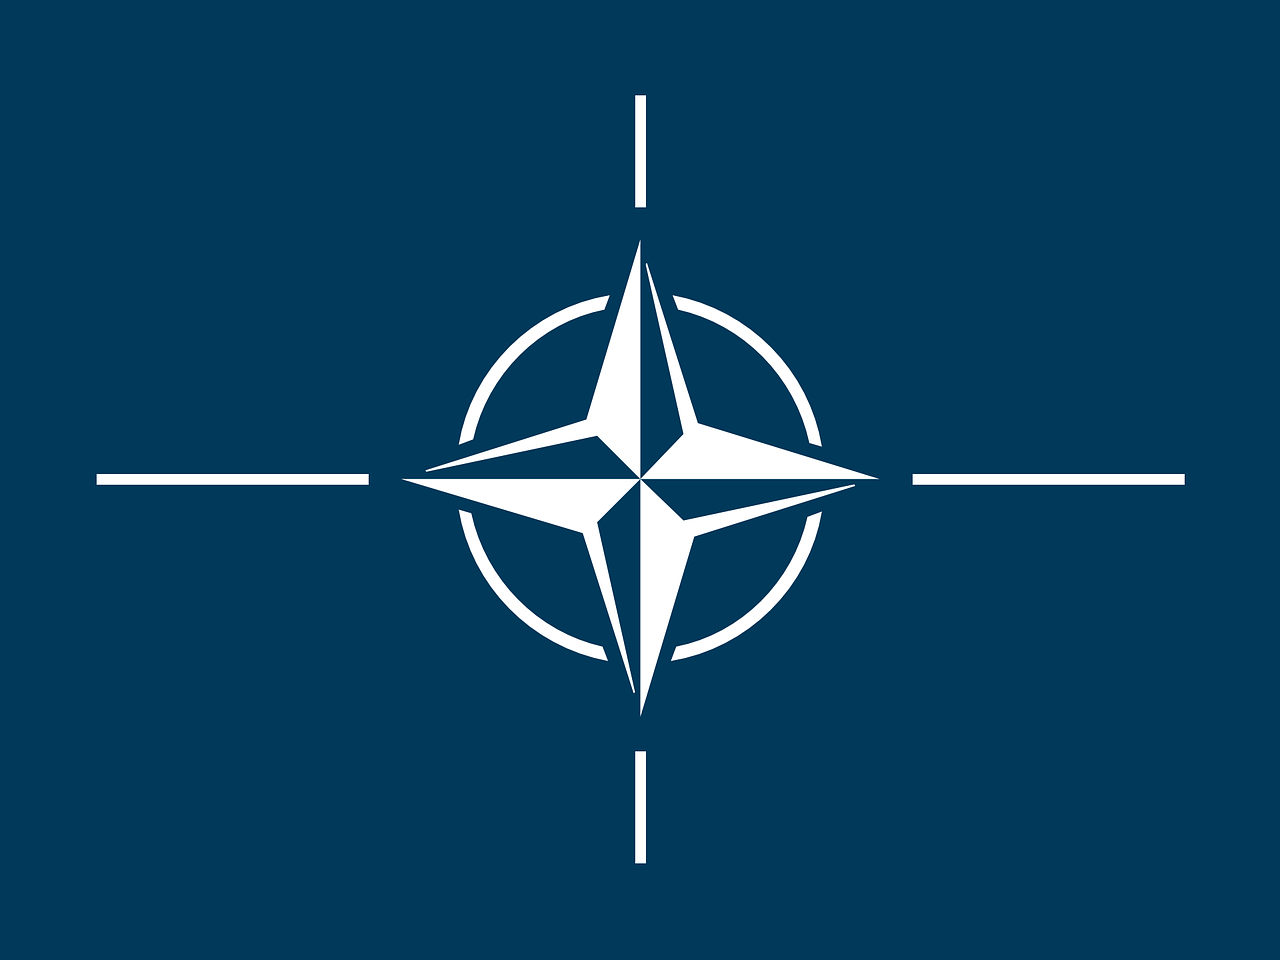 75 Jahre NATO